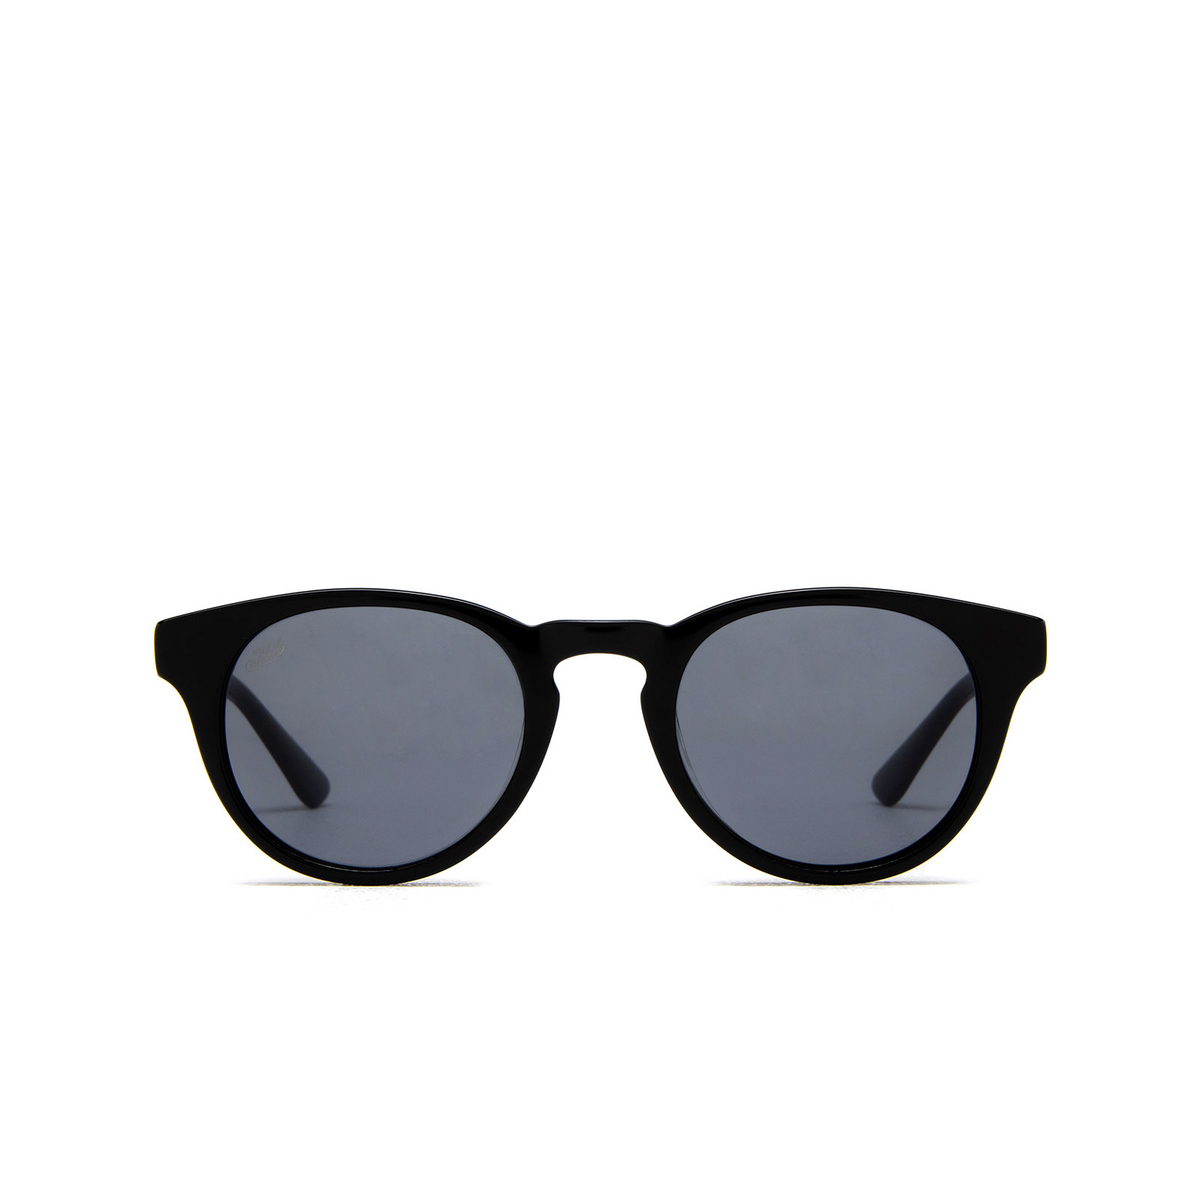 Akila ATELIER Sunglasses 01/01 Black - front view